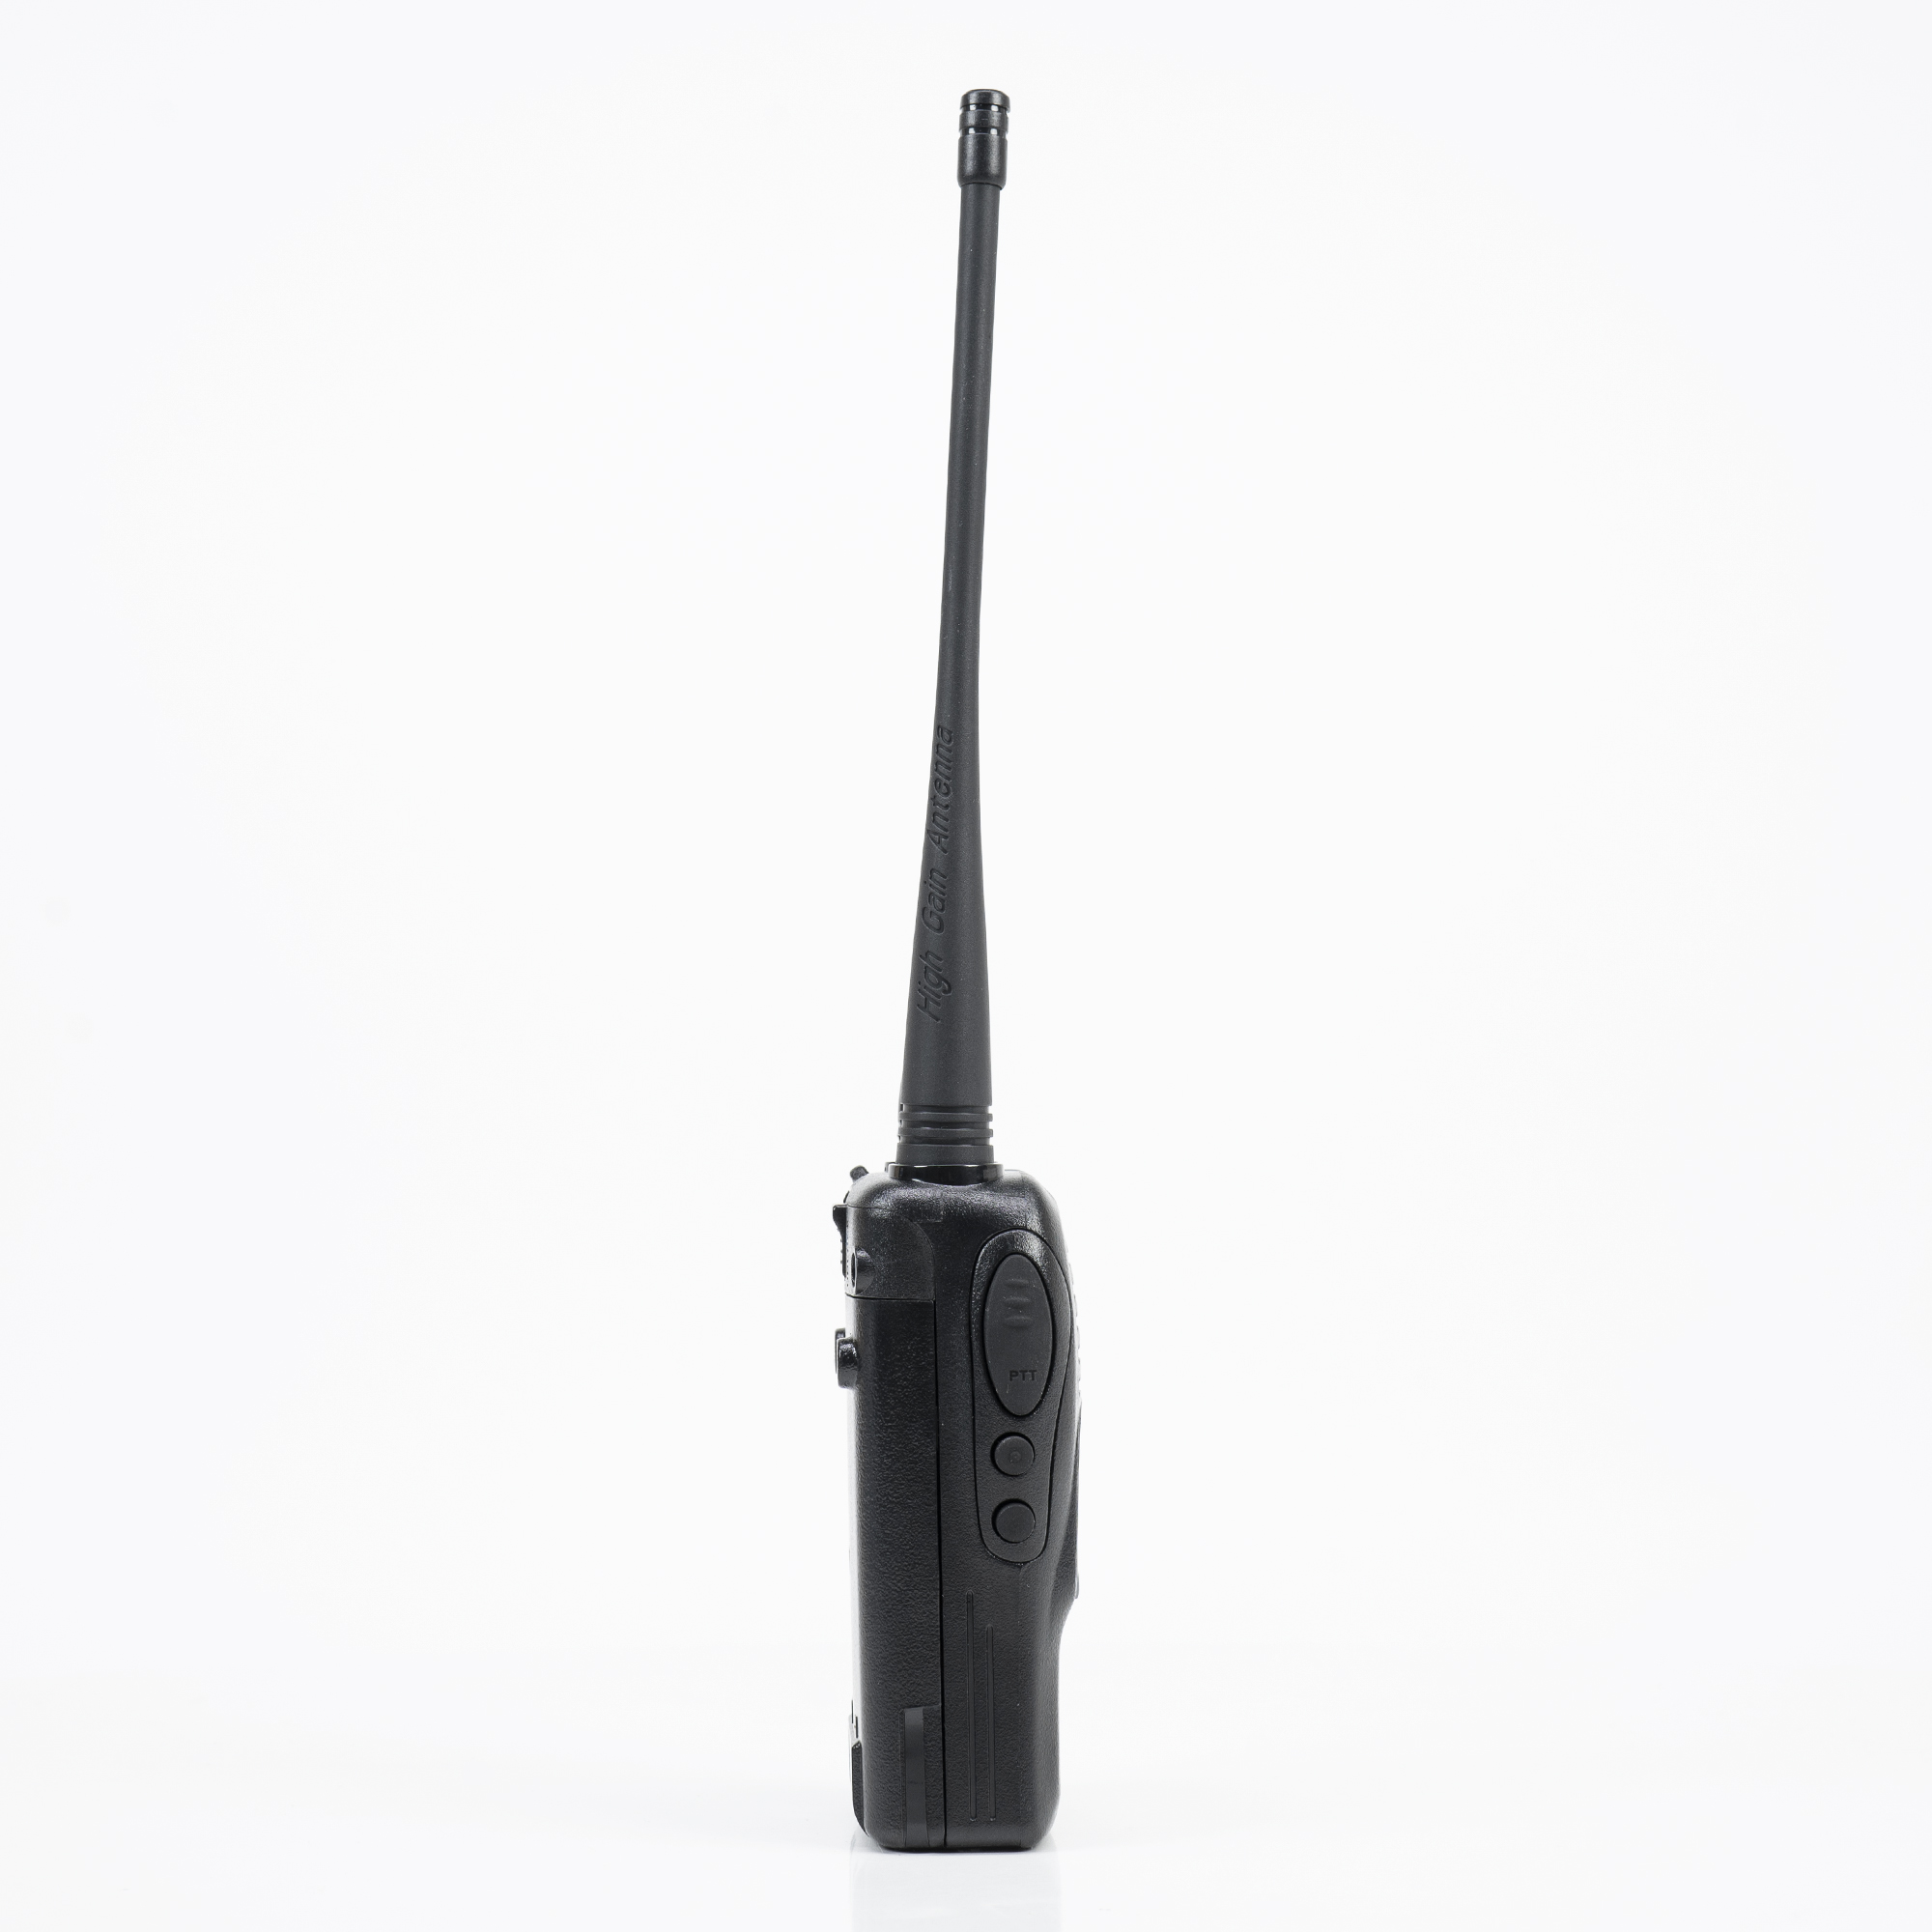 Statie radio PMR portabila CRT 8WP PMR UHF, waterproof IP67, Scan, Squelch, Vox, Radio FM image4